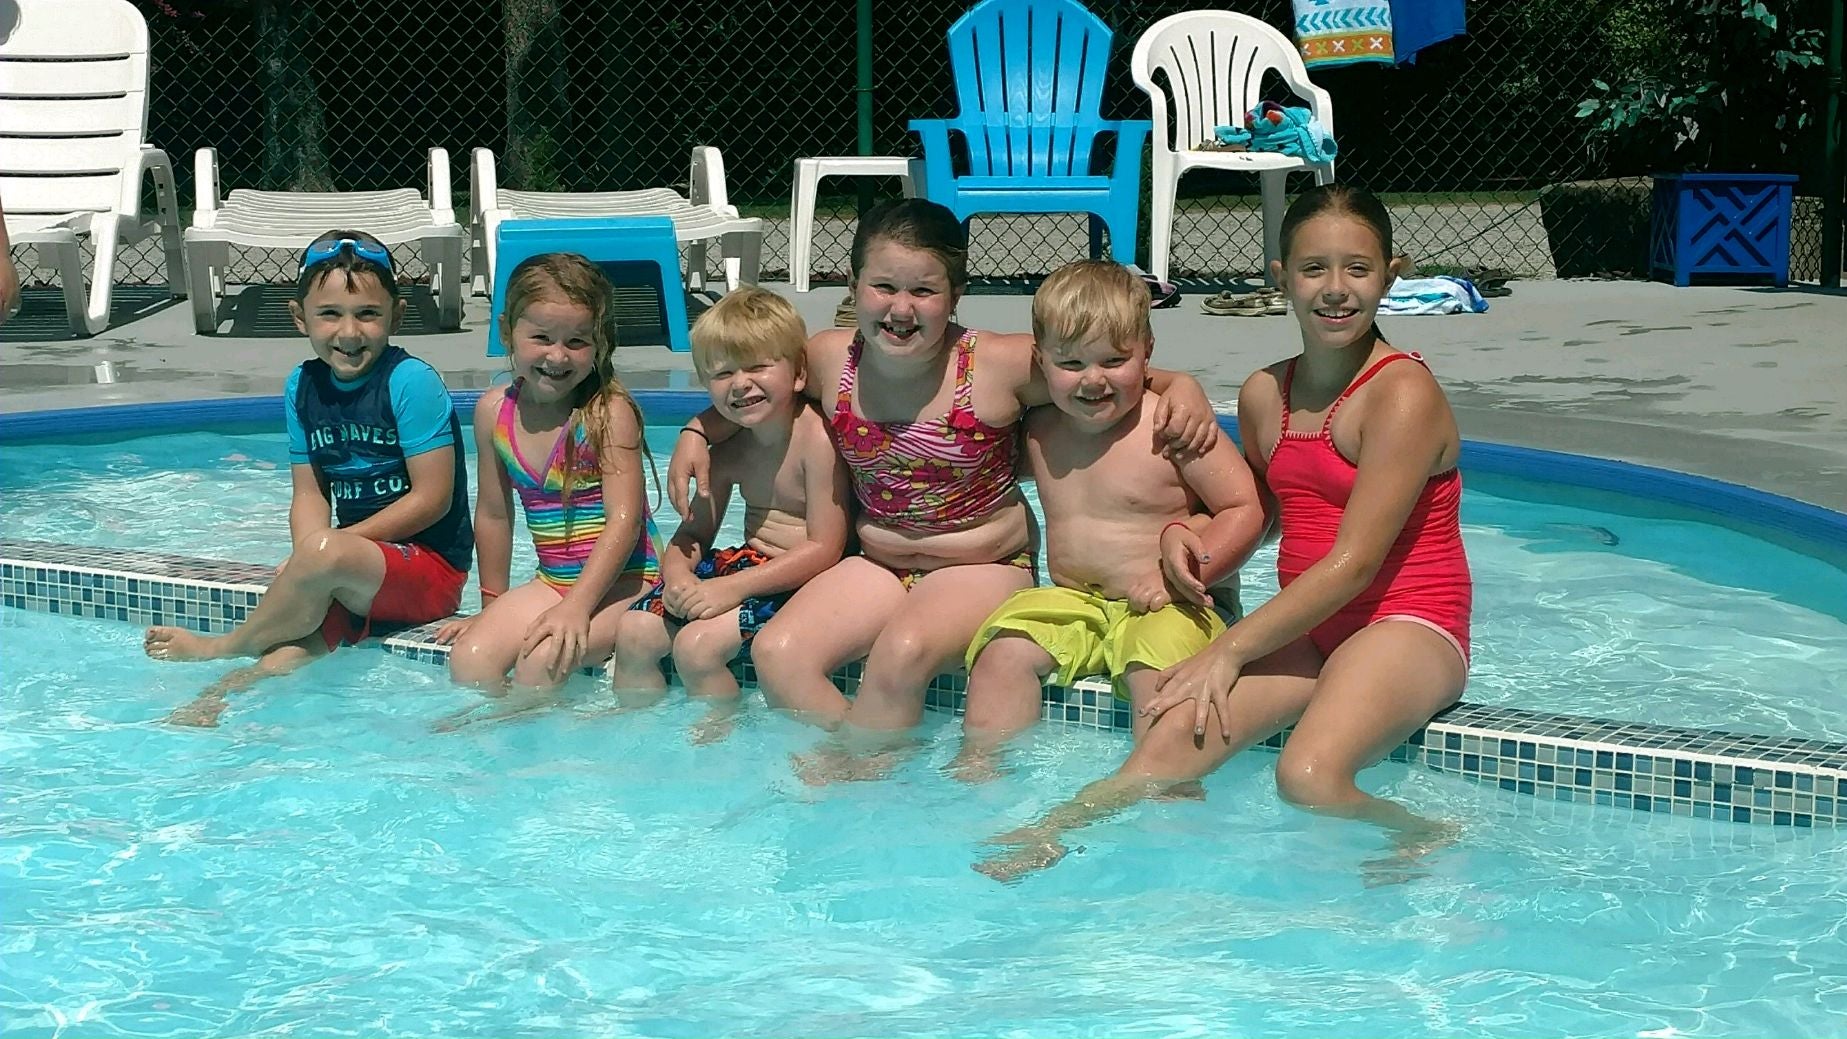 Kids taking in the pool